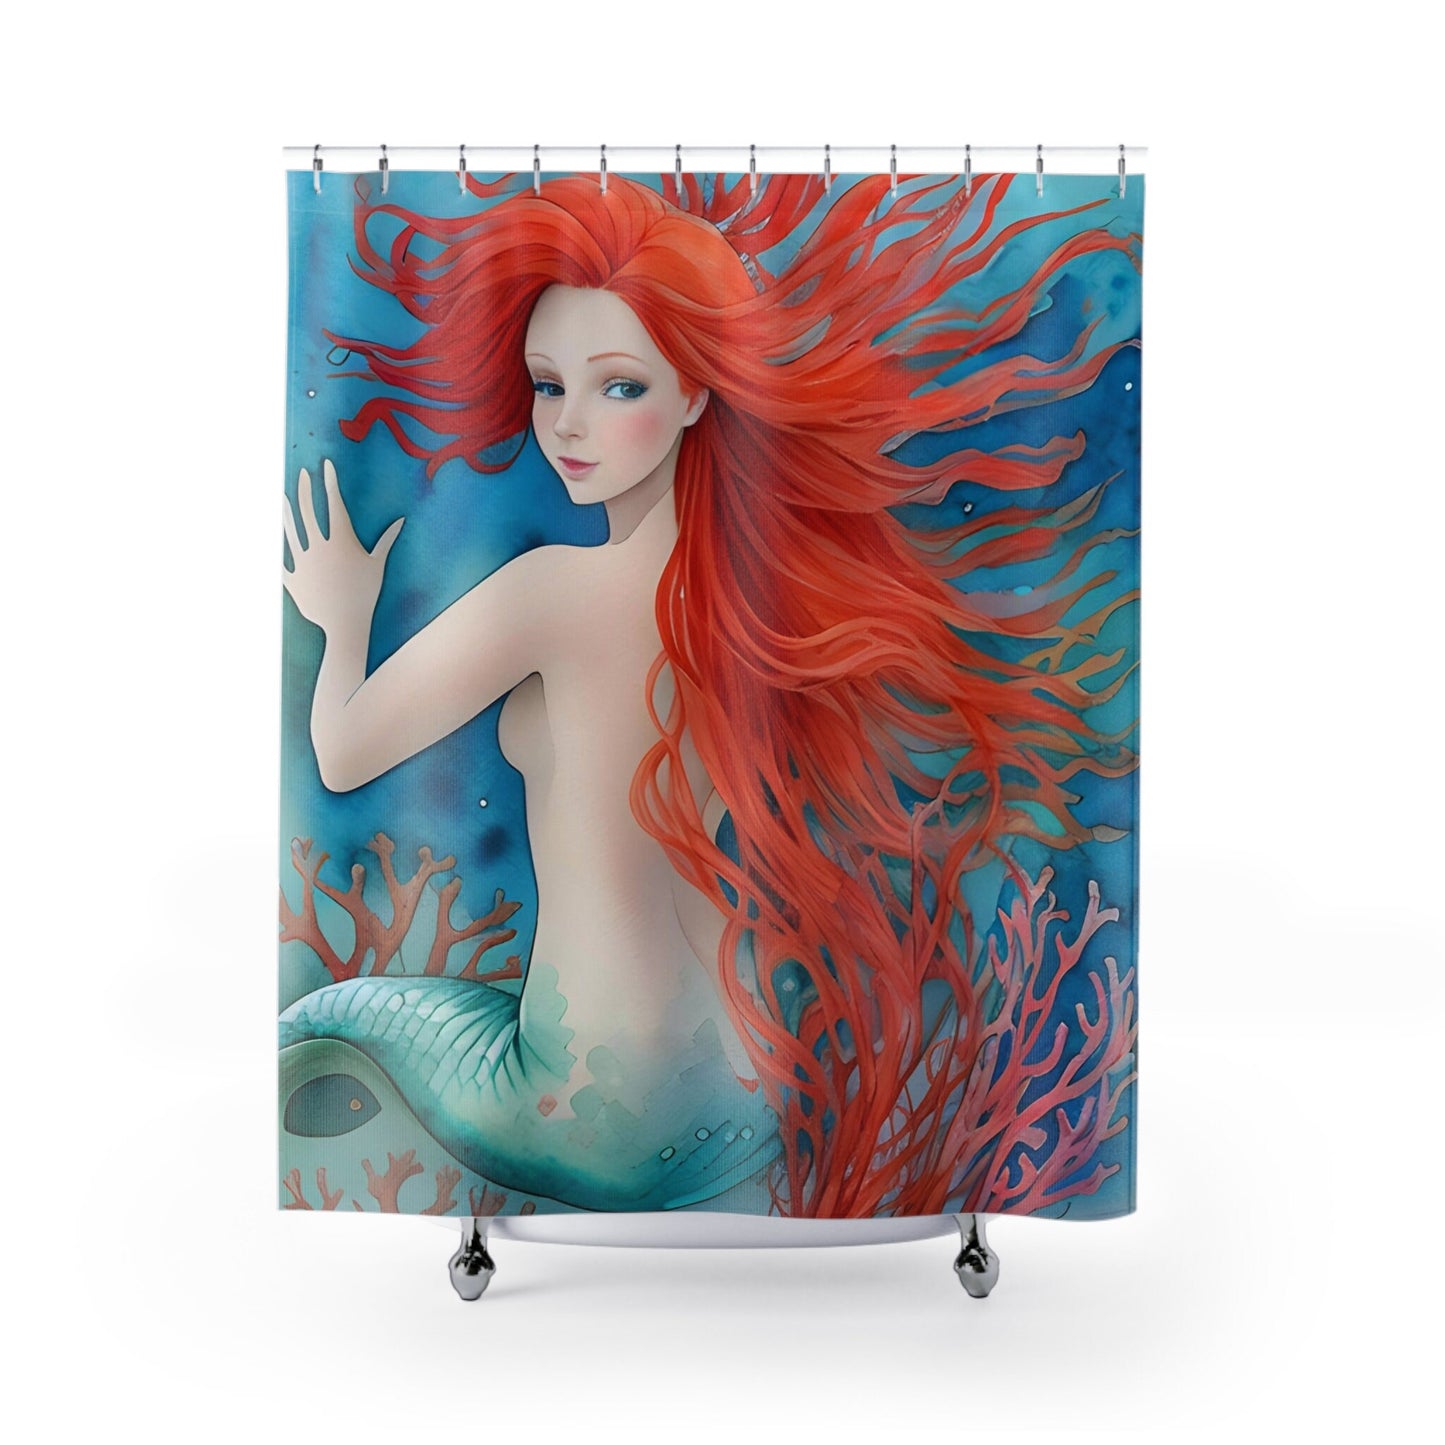 Mermaid Shower Curtain ocean shower curtains mermaid shower curtain red haired sexy mermaid bath decor